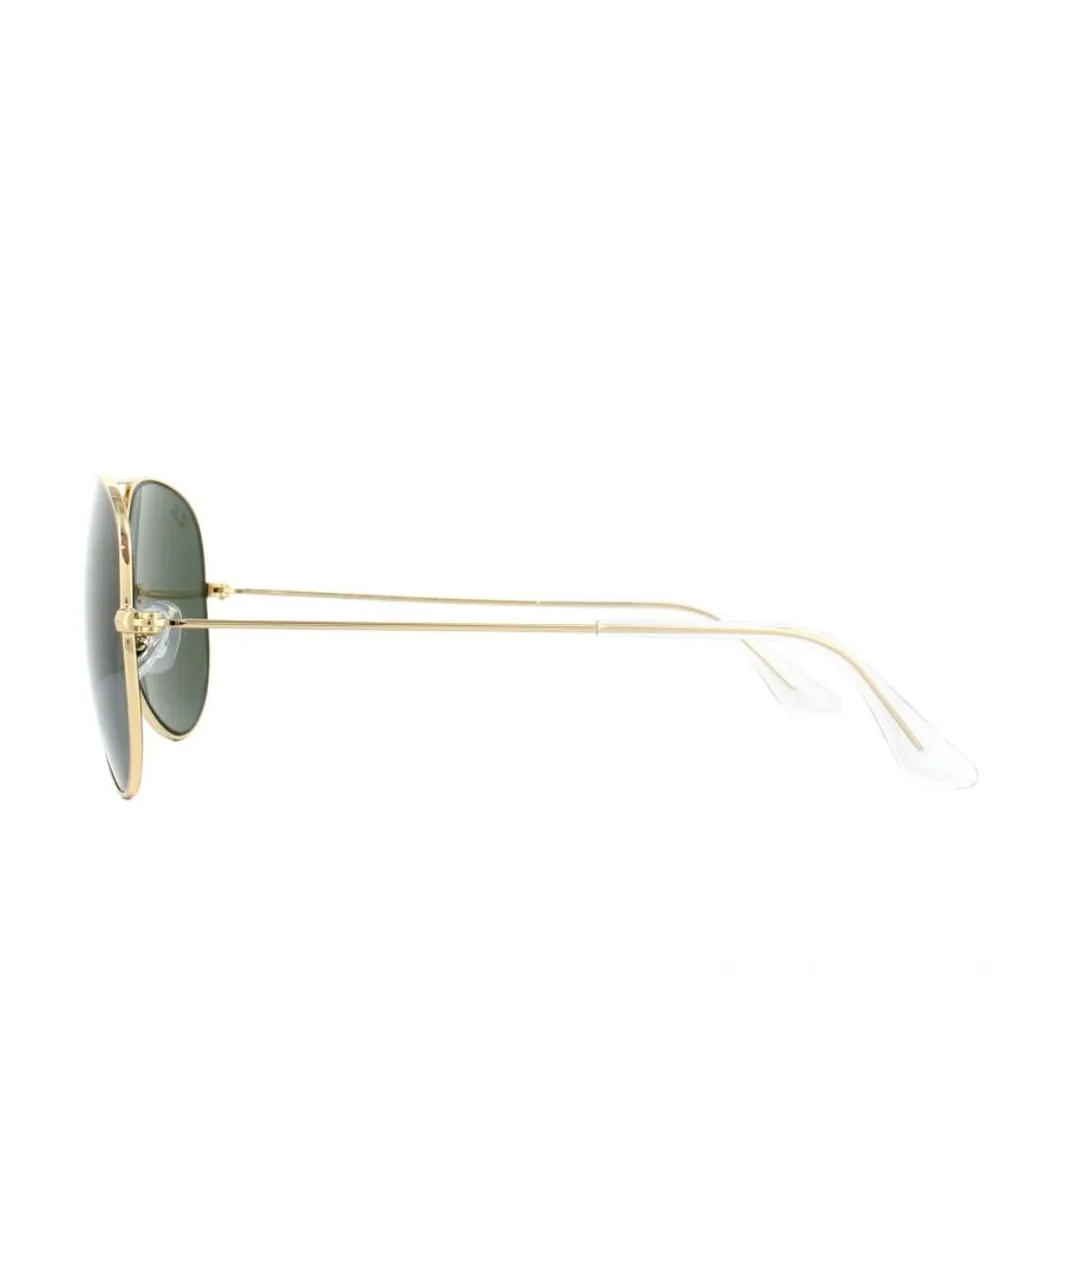 Ray-Ban Unisex Sunglasses Aviator 3025 L0205 Gold Green Metal - One